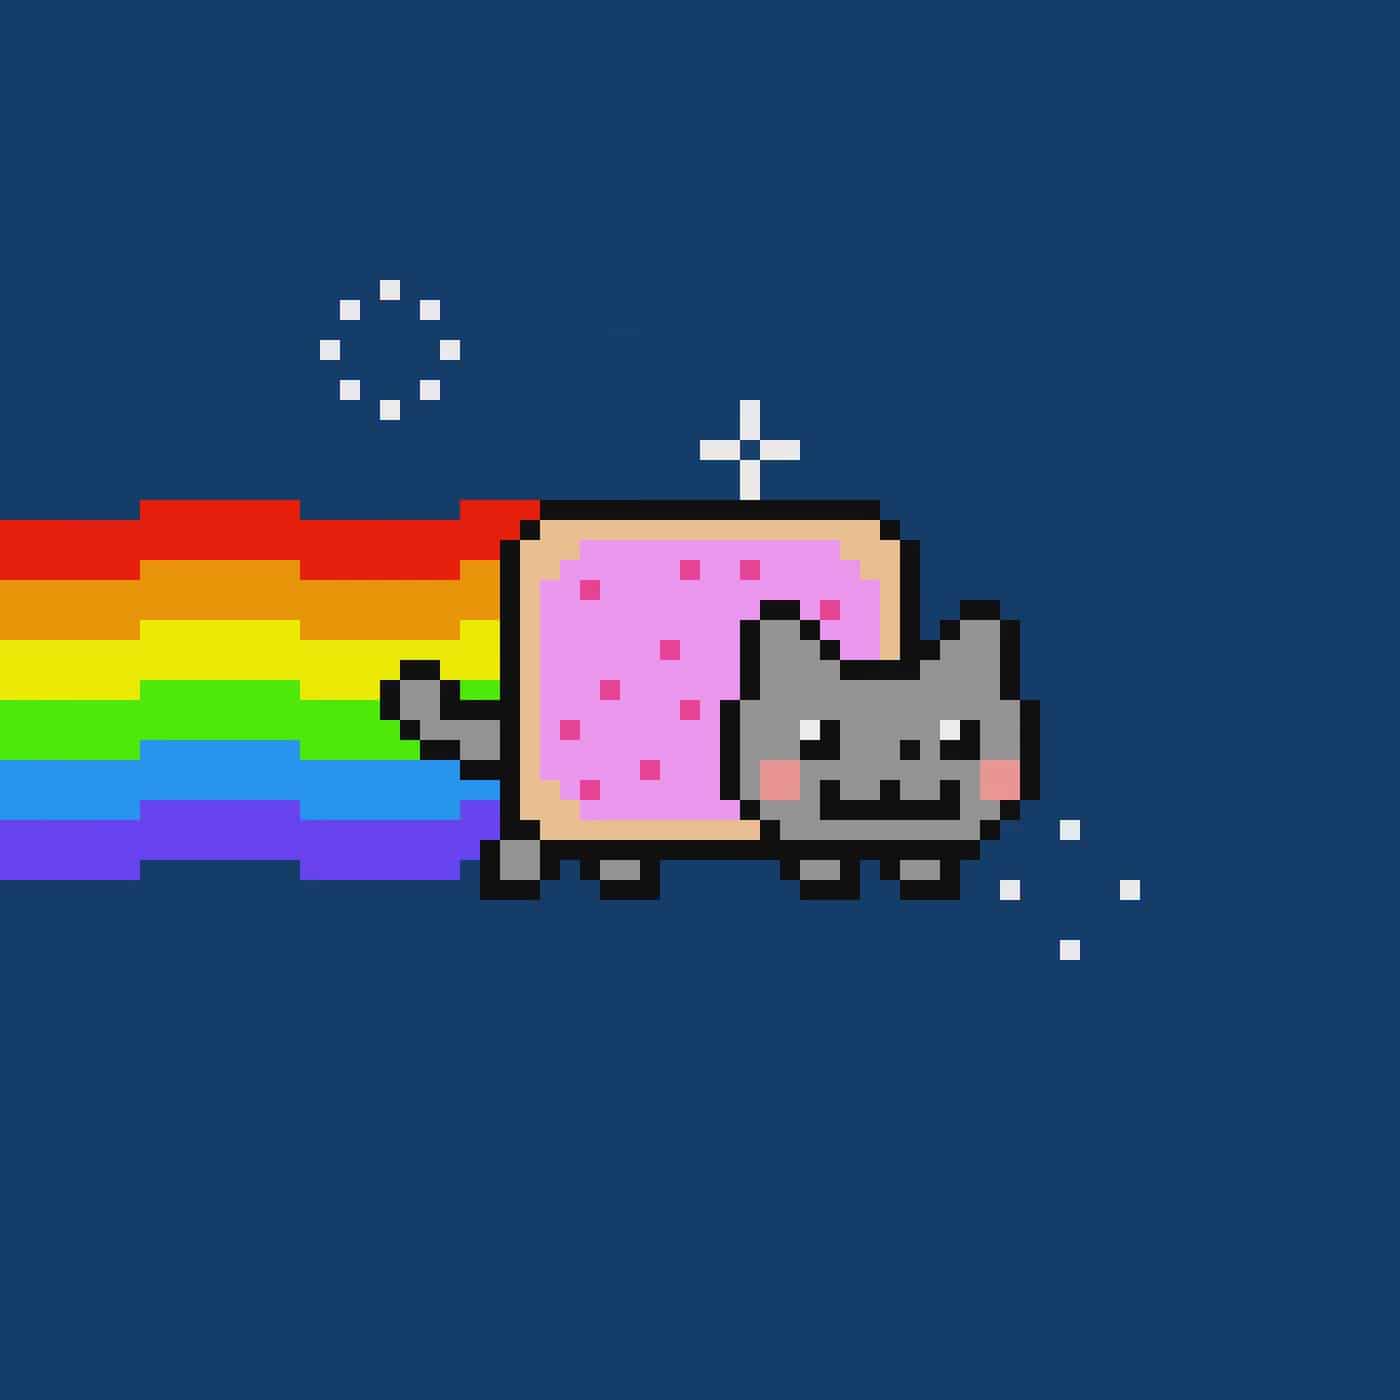 Nyan Cat on the Blockchain